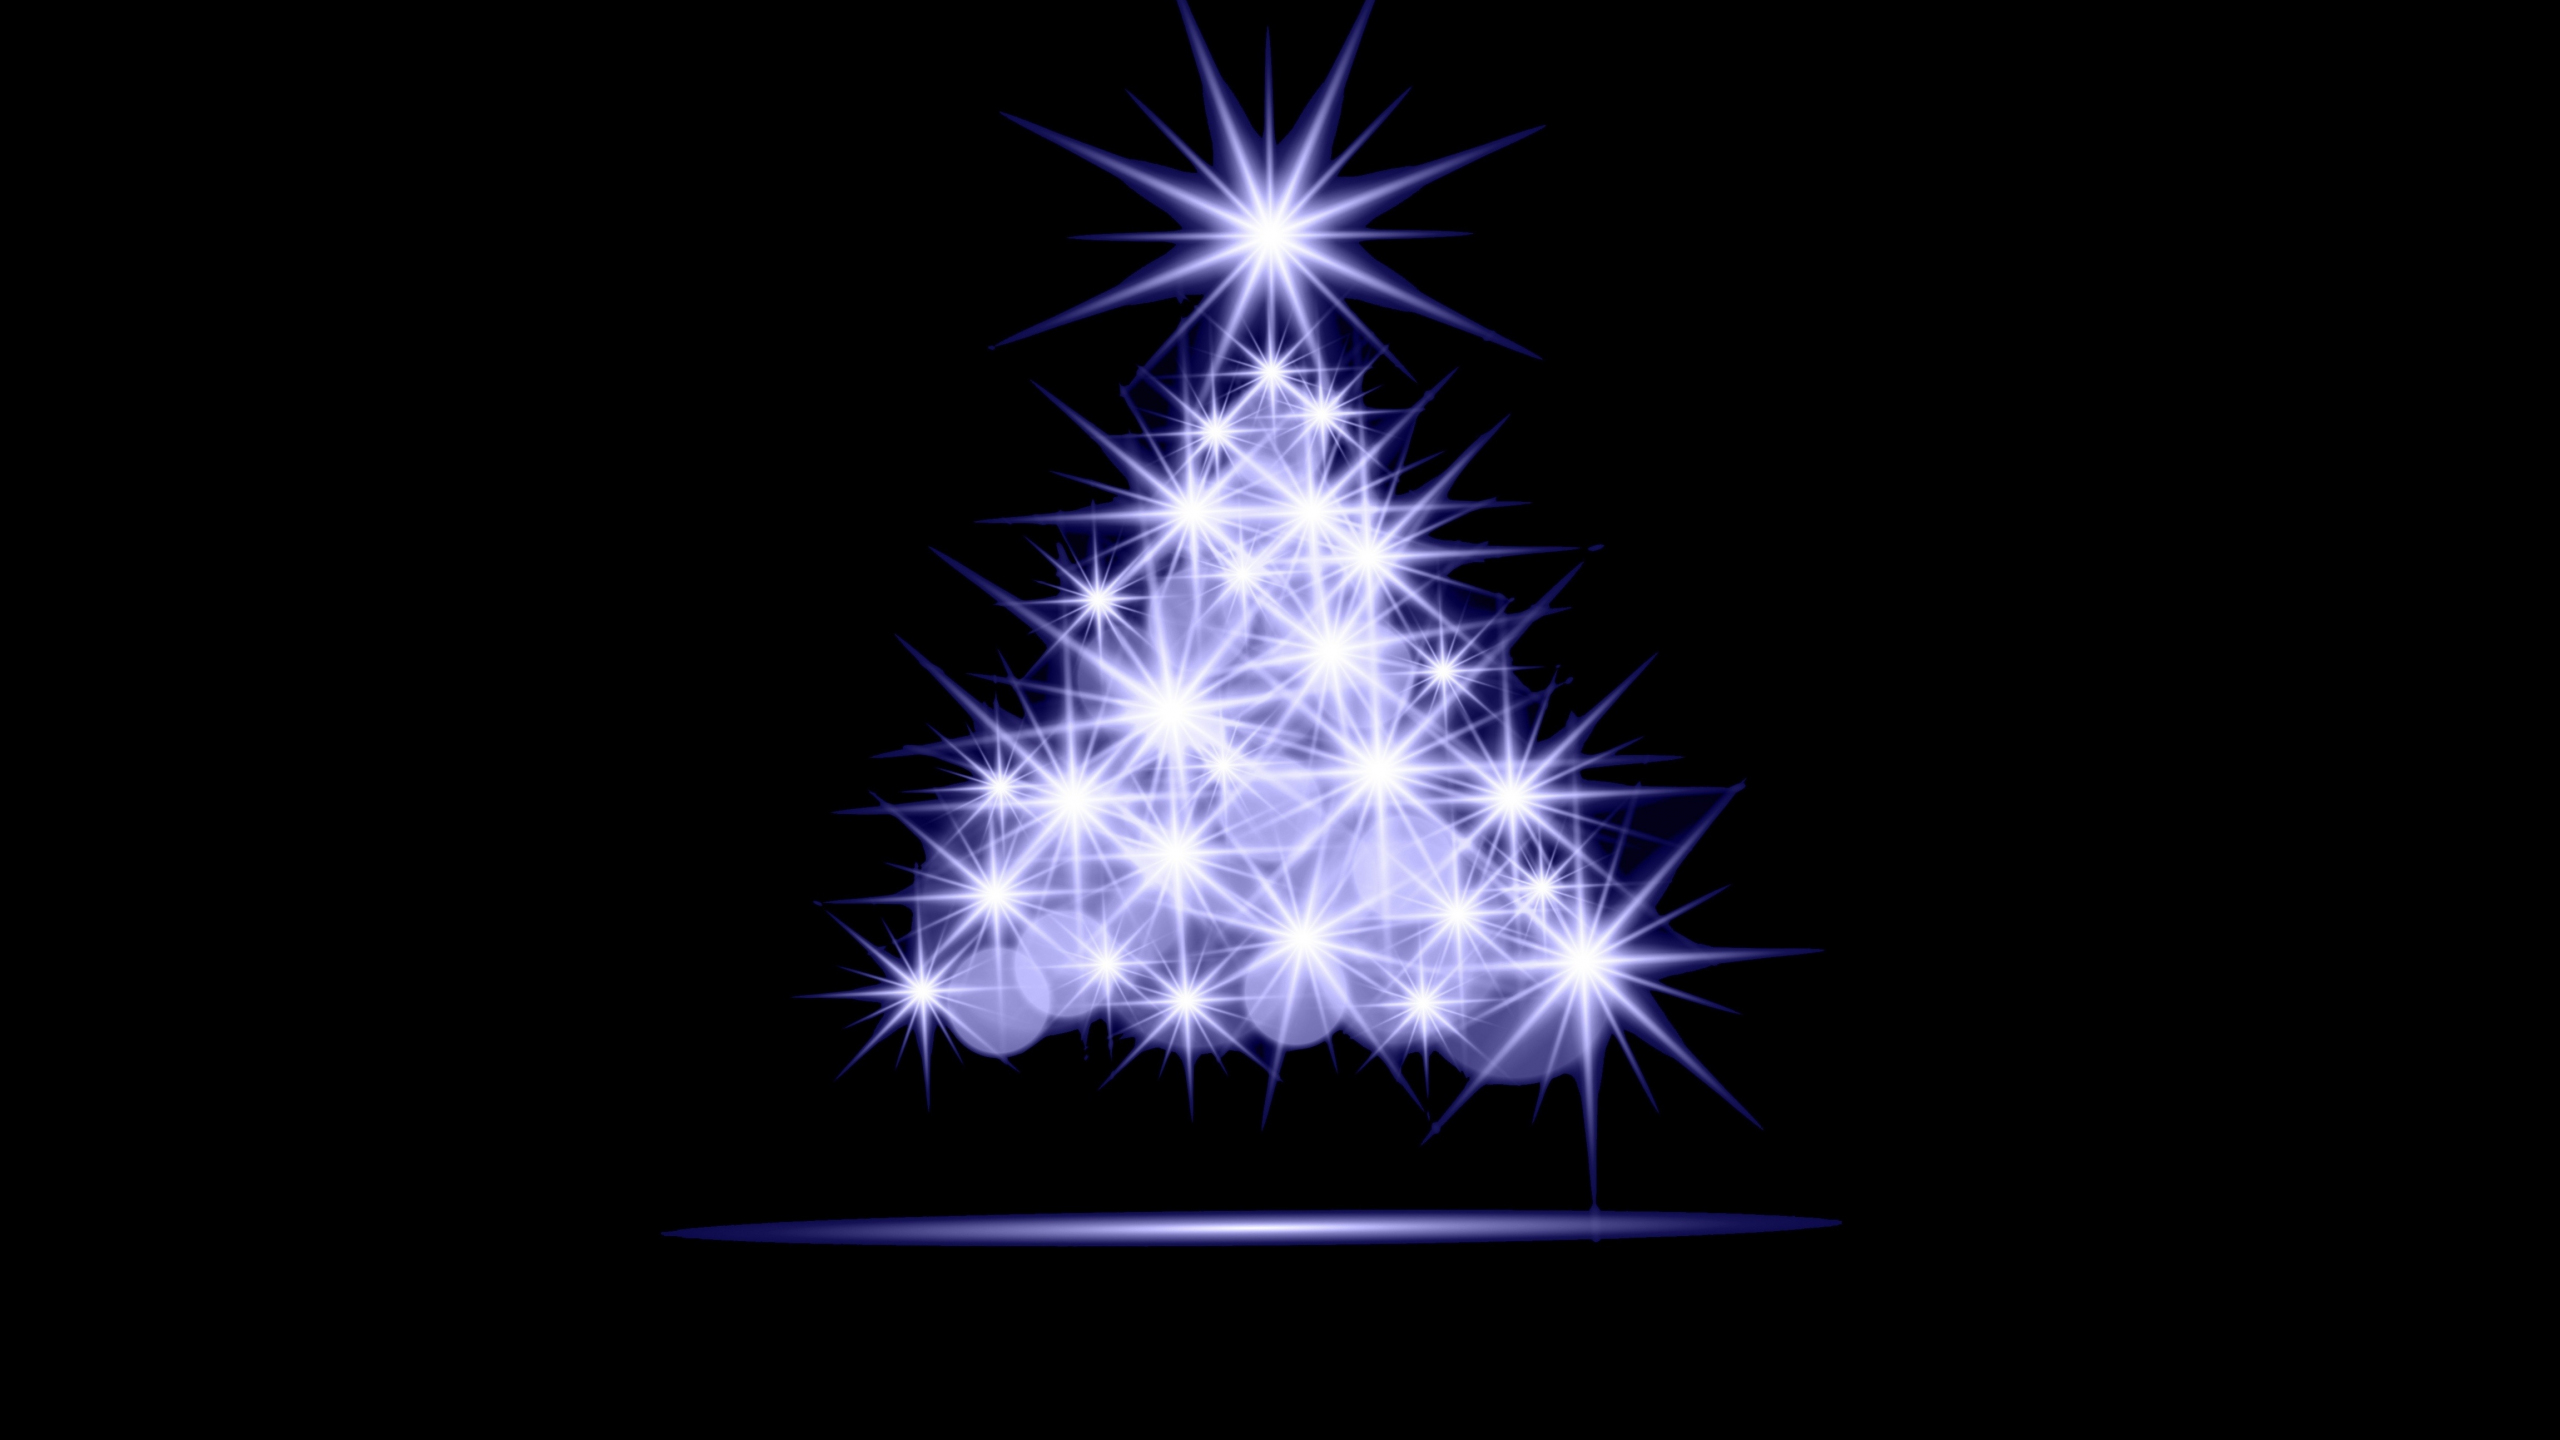 Download 2560x1440 wallpaper christmas tree, digital art, minimal, dual wide, widescreen 16: widescreen, 2560x1440 HD image, background, 15742